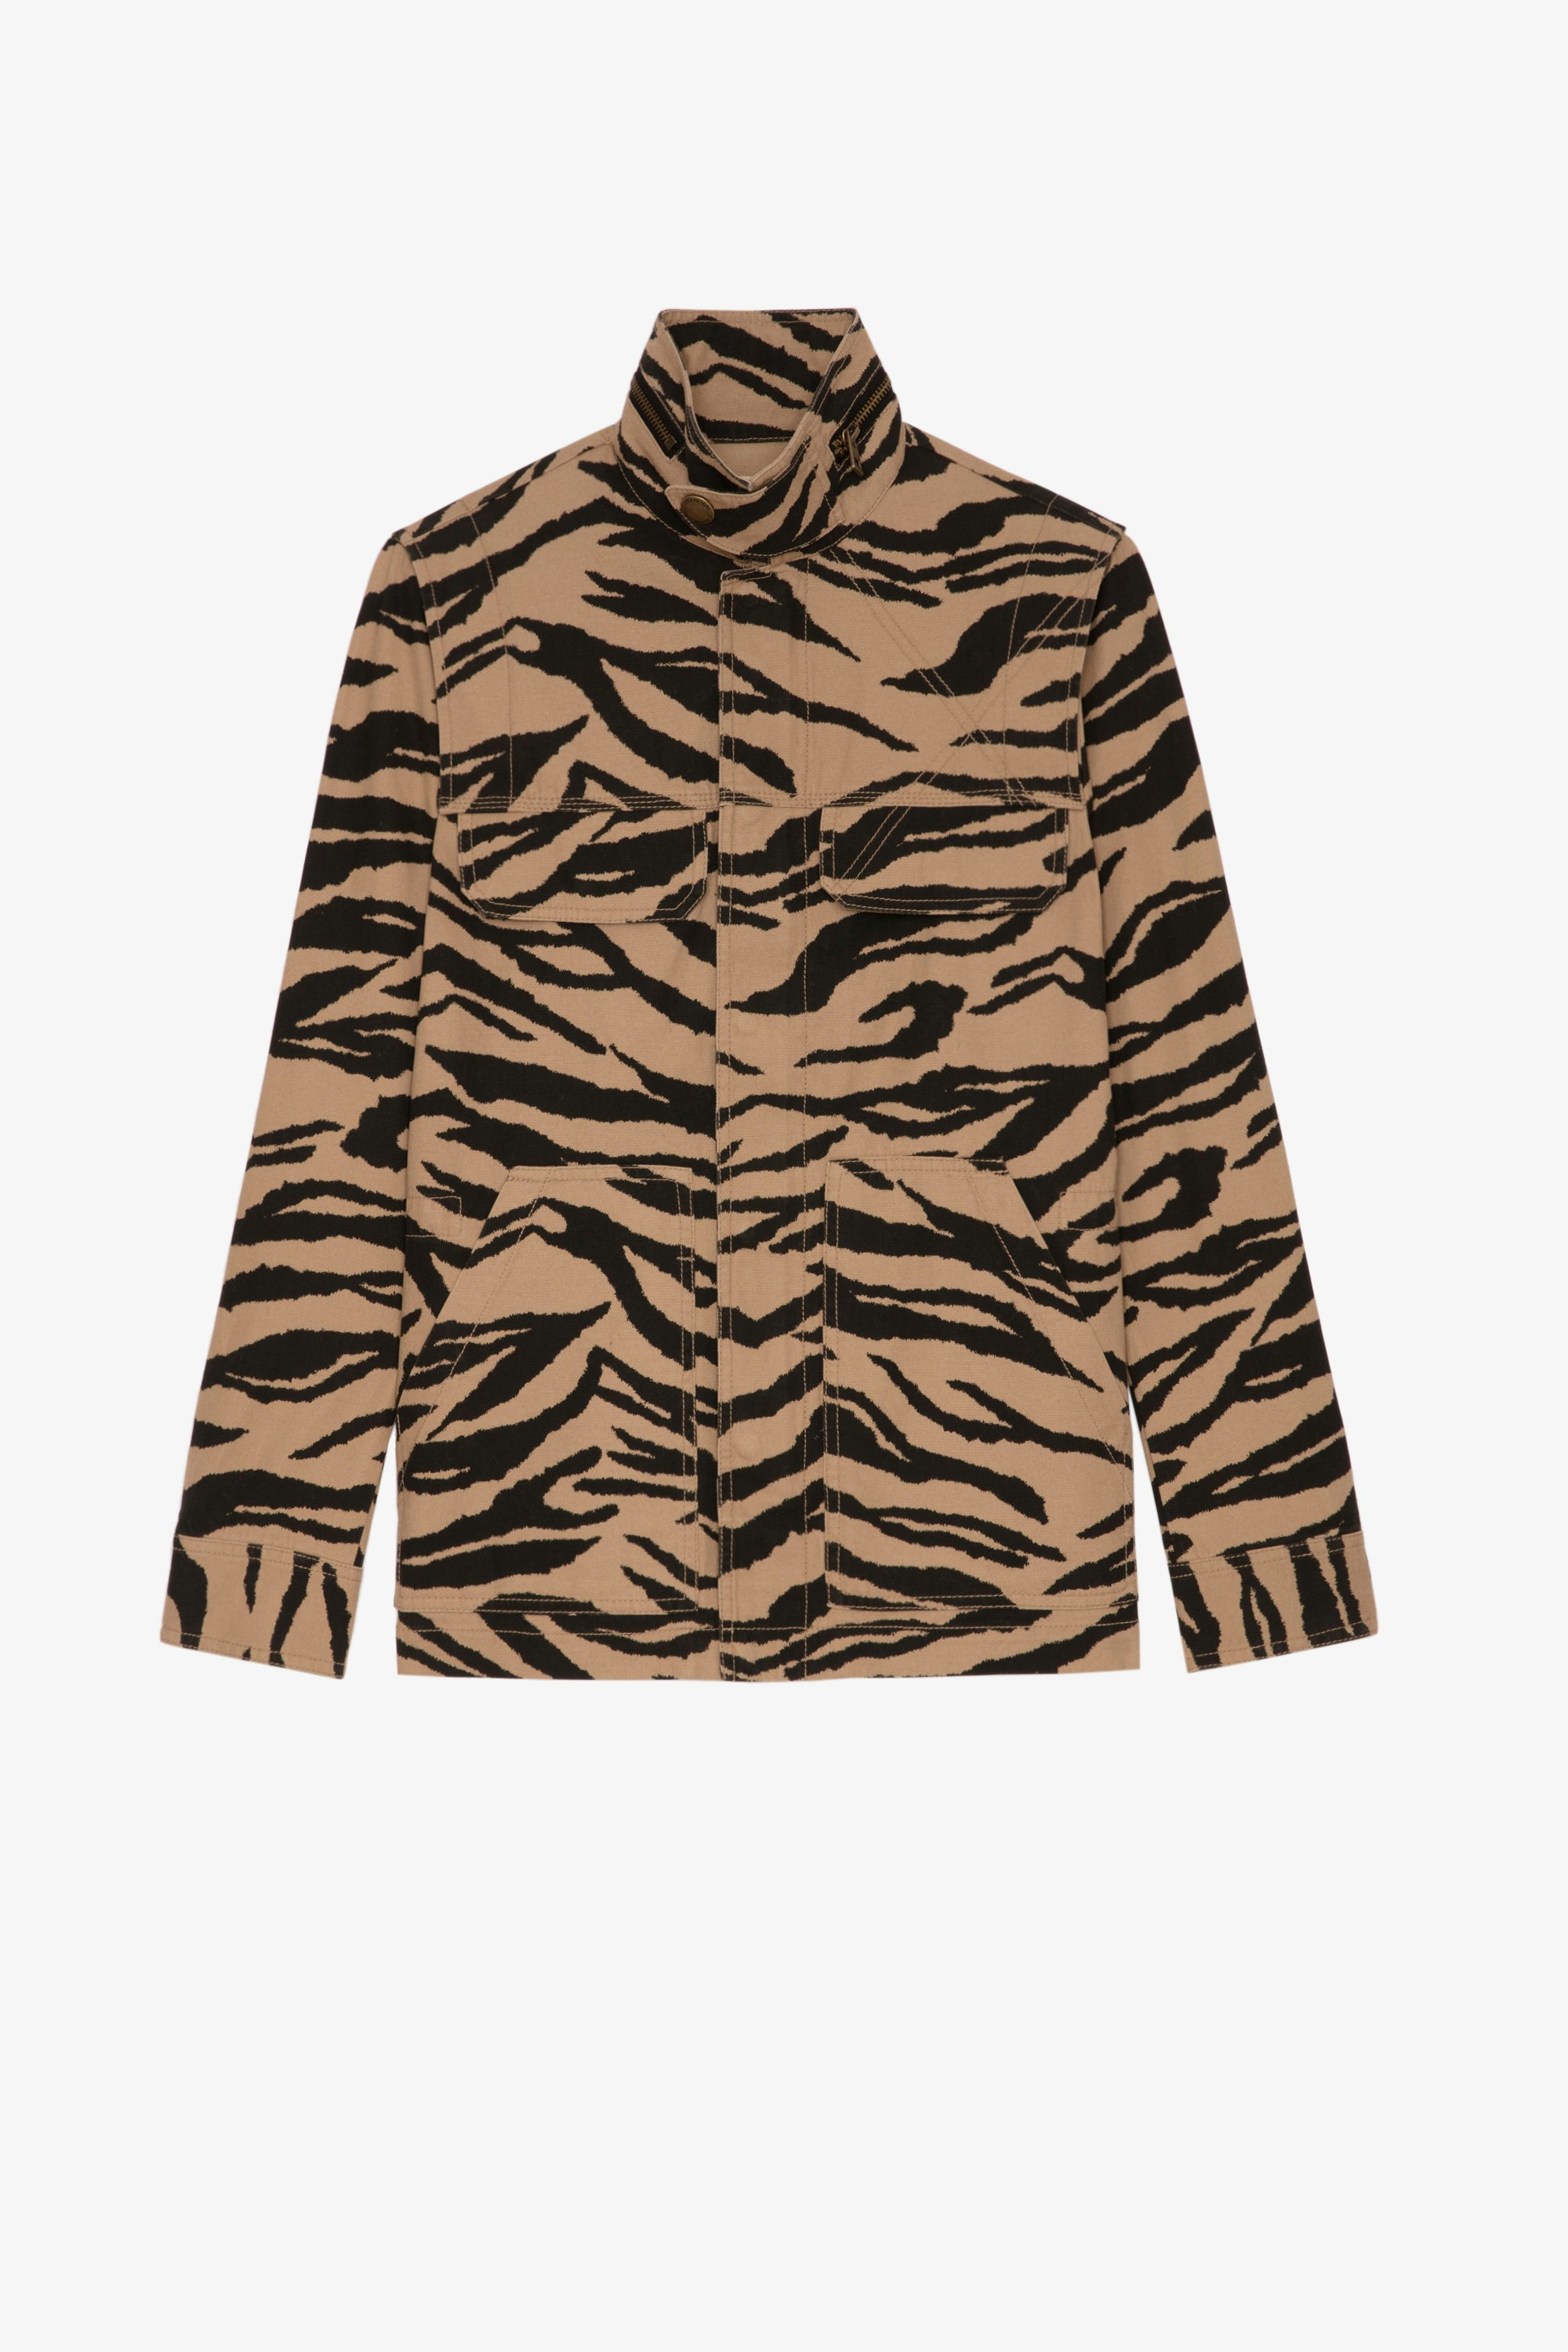 Kayaka Canvas Tiger ジャケット Women's tiger-print military jacket 